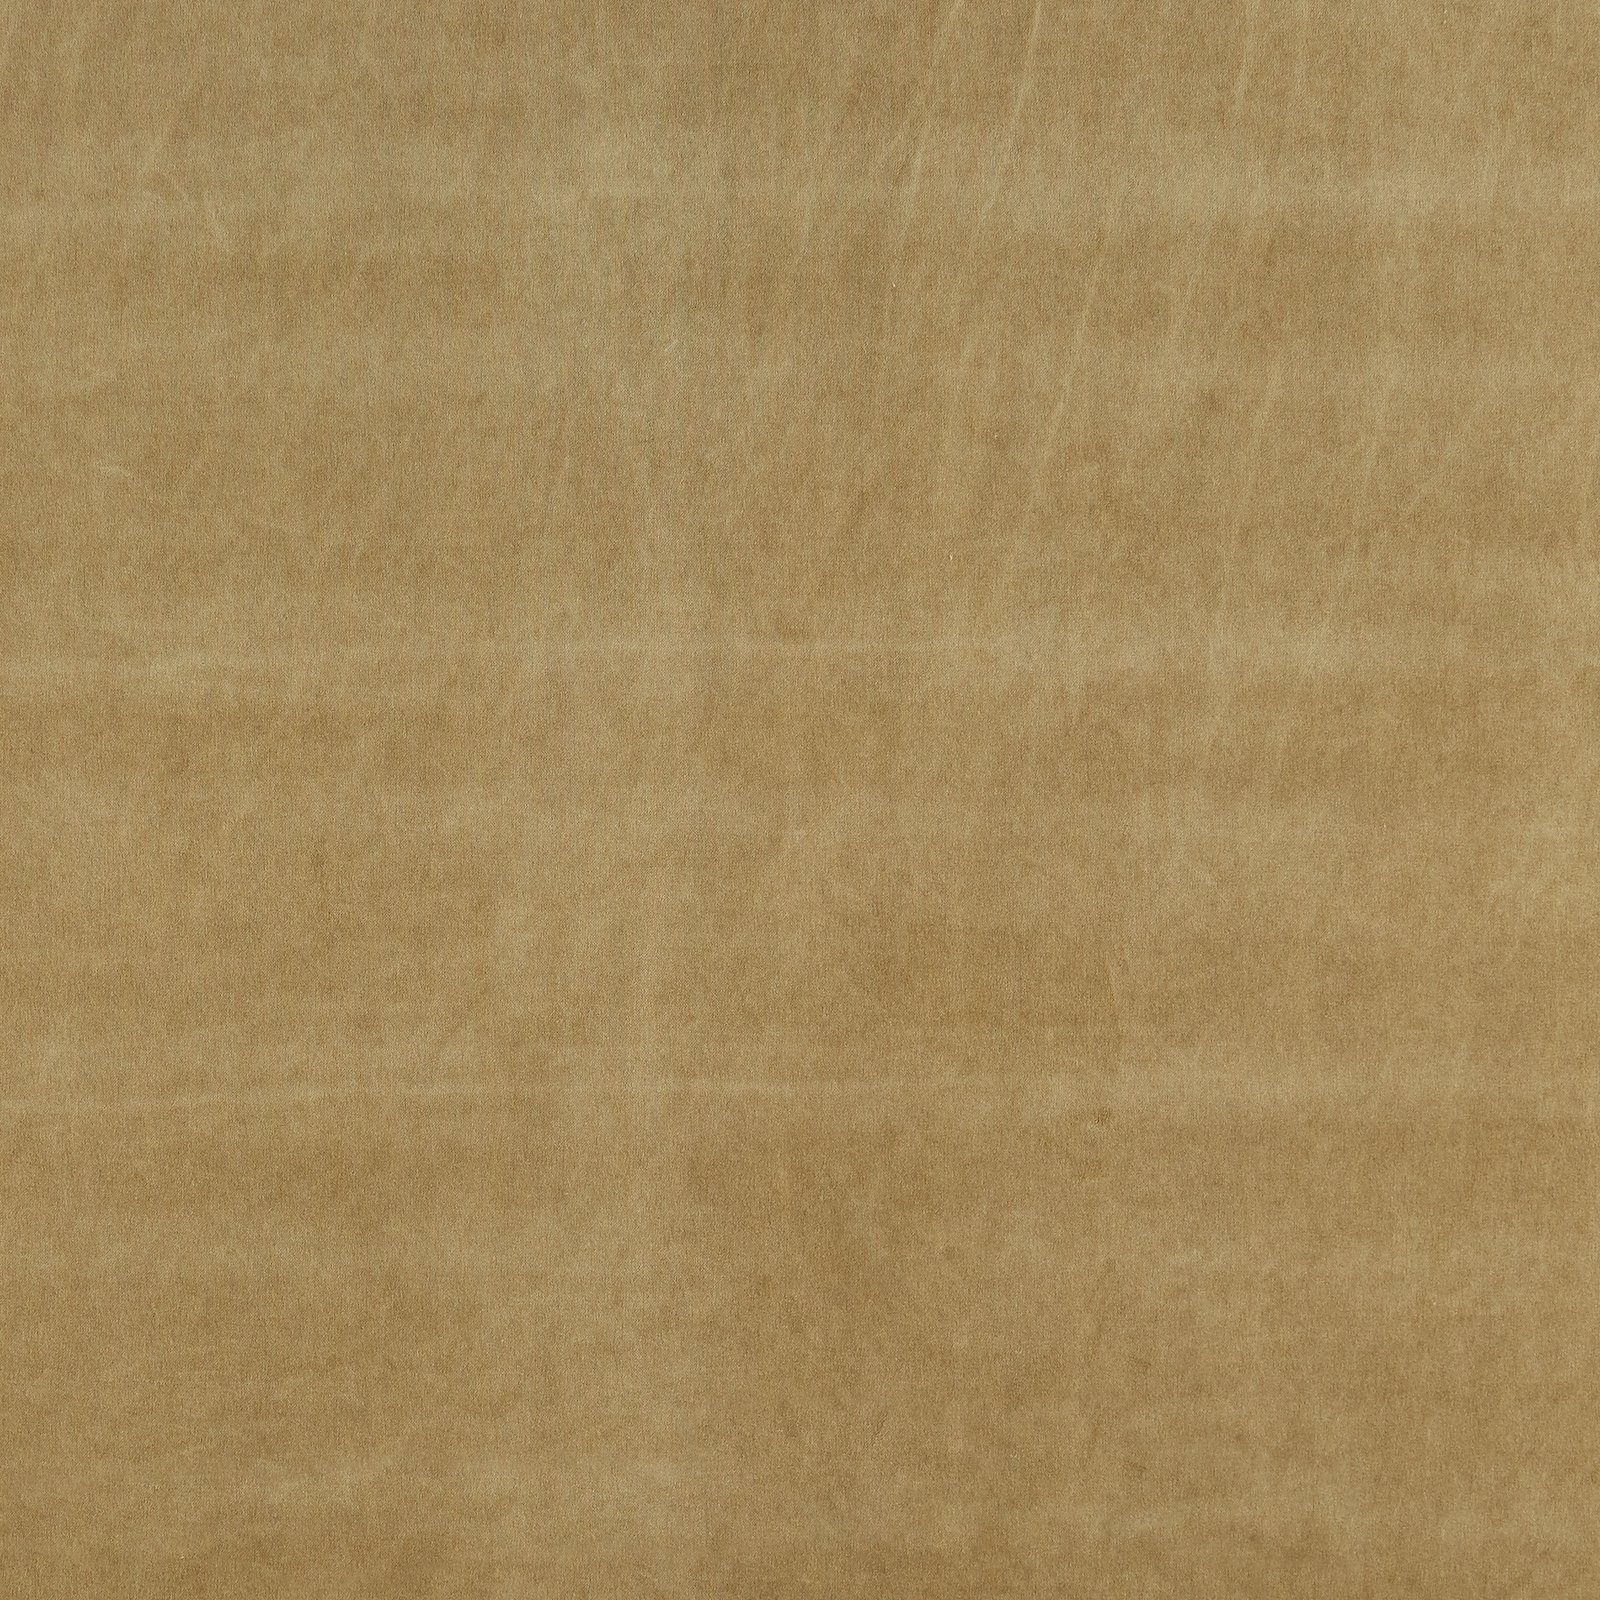 Upholstery velvet golden stonewashed 826652_pack_solid